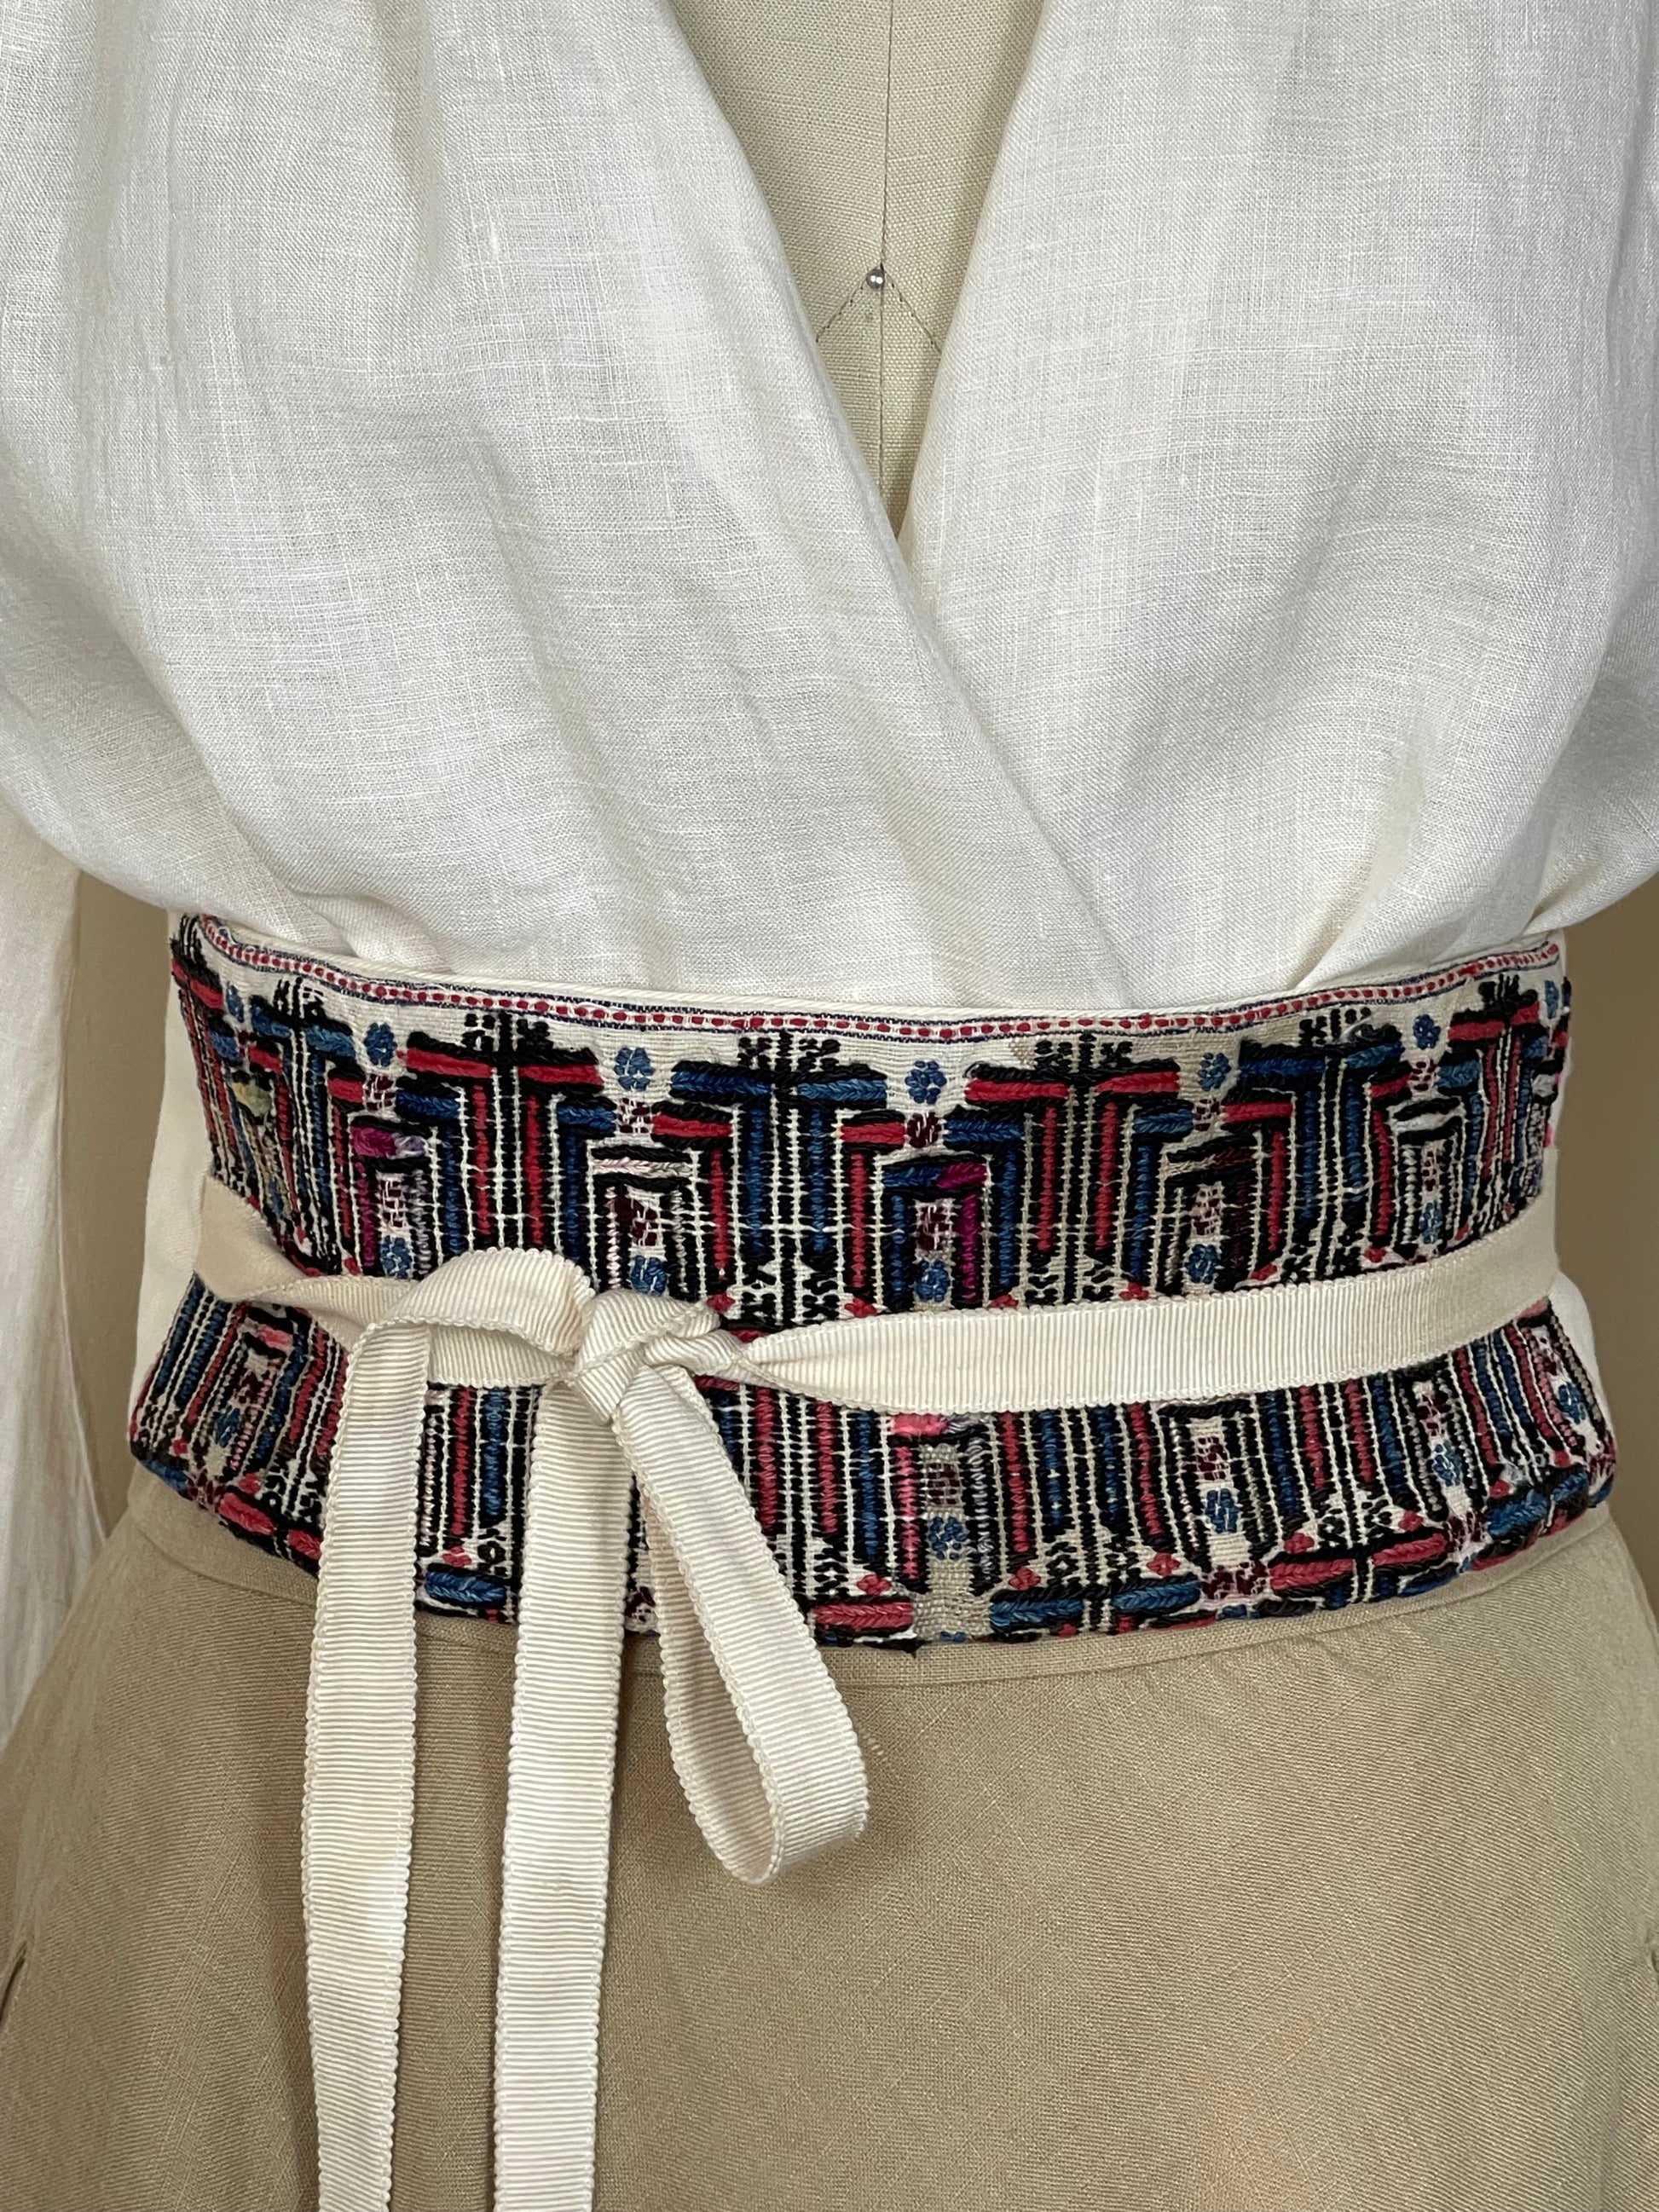 The belt worn with Blouse Borgia